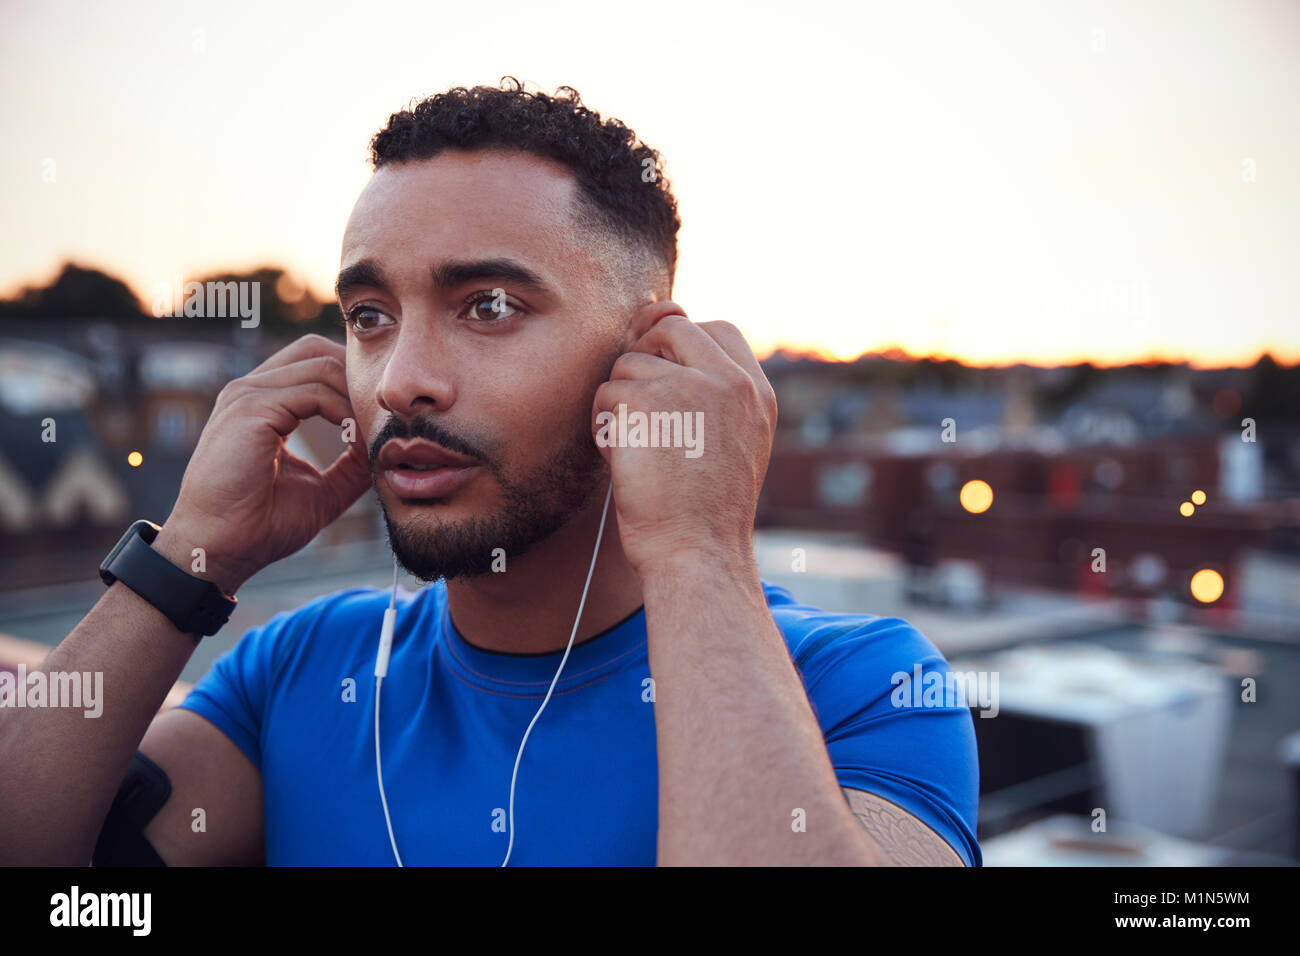 Male runner in urban setting adjusting earphones, close up Stock Photo